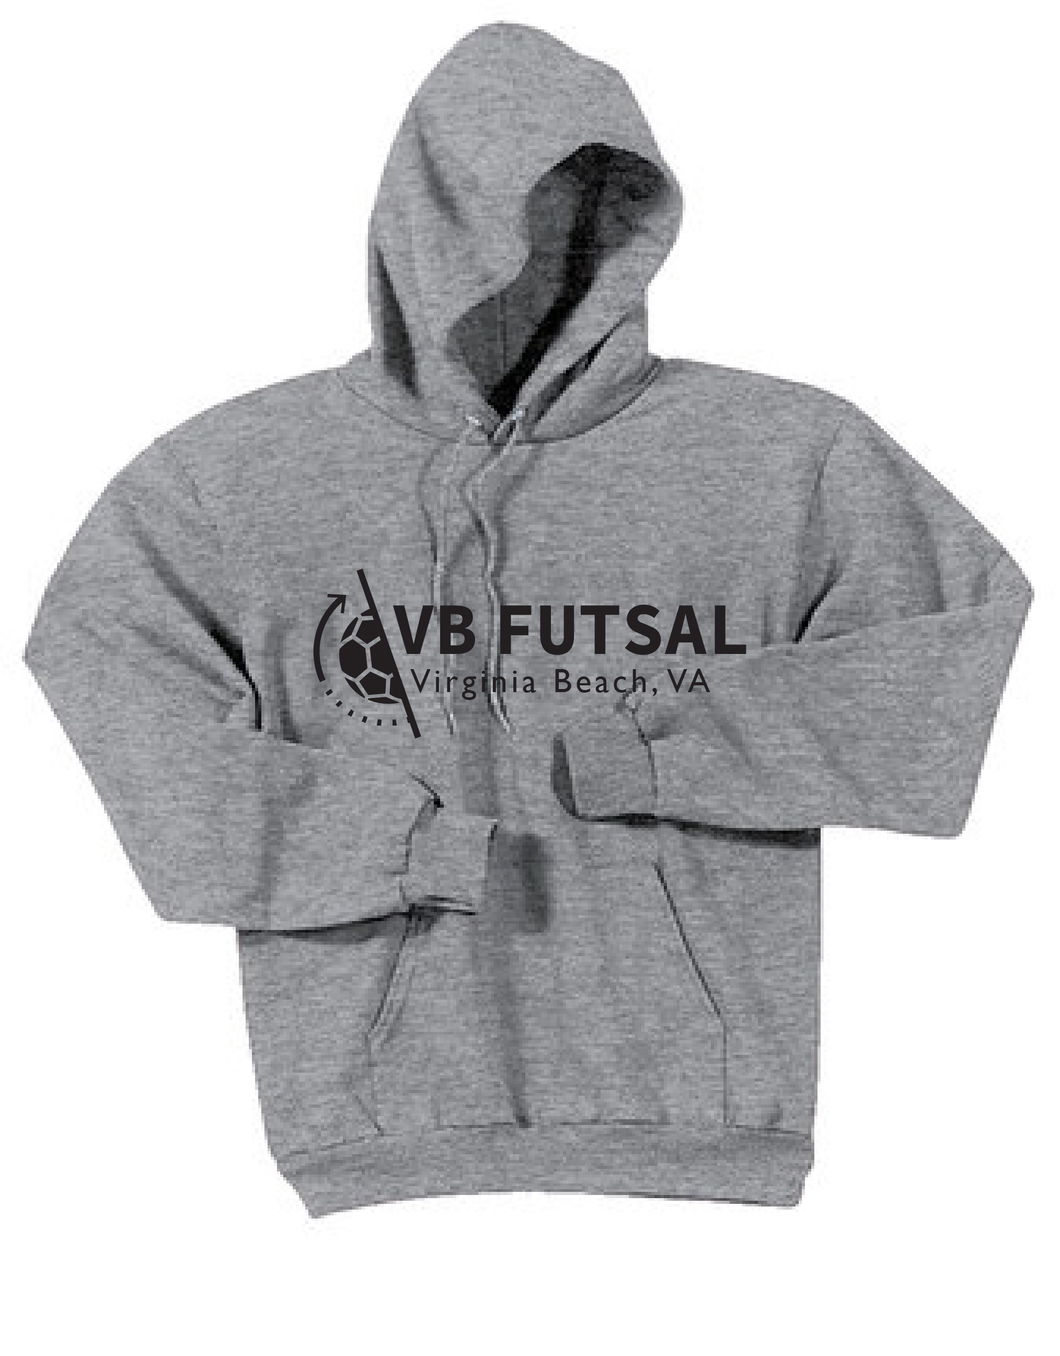 Fleece Pullover Hooded Sweatshirt (Youth & Adult) / Ash Gray / VB FUTSAL